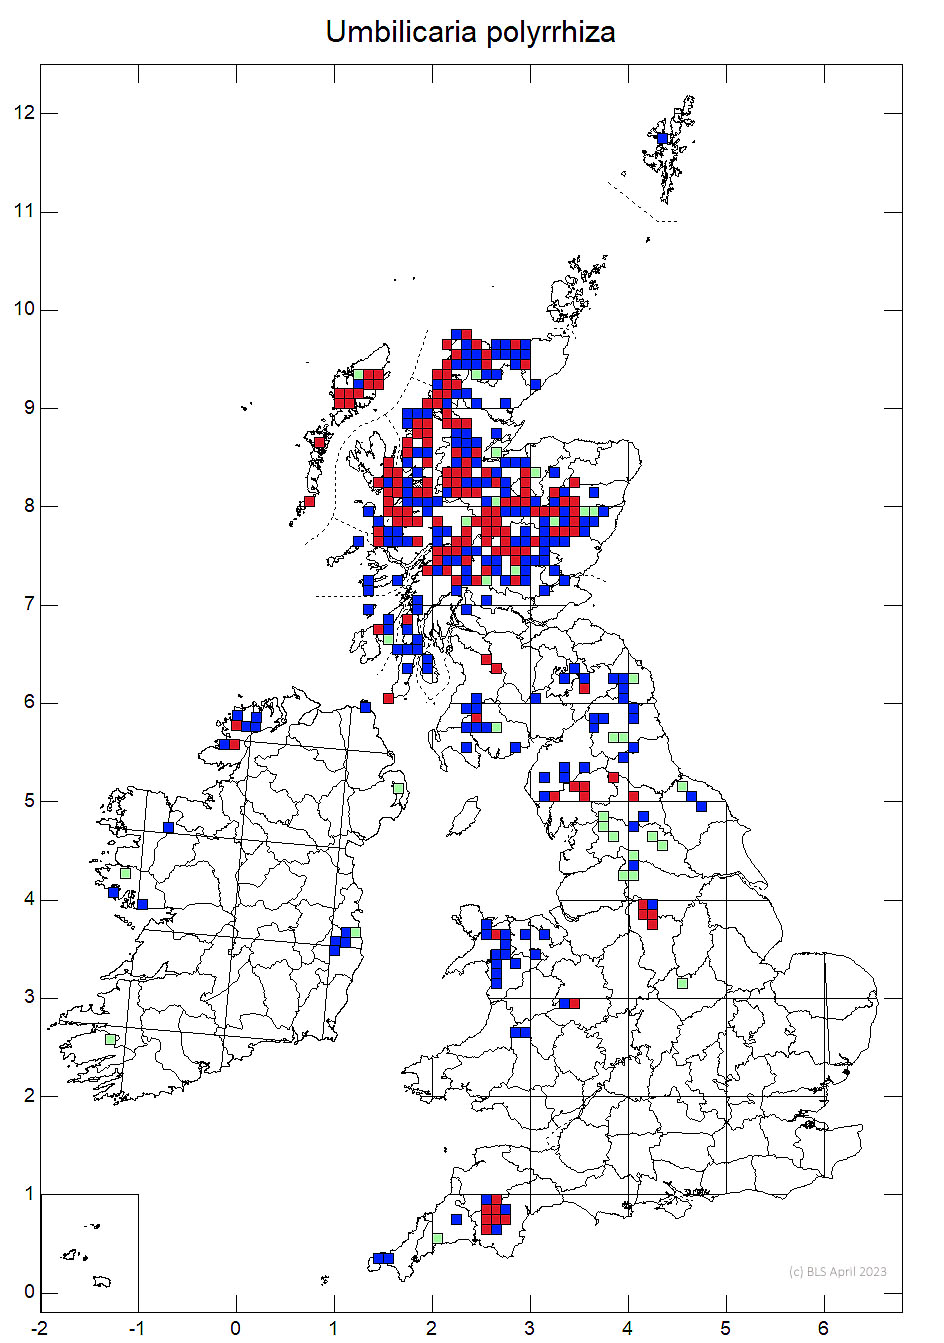 Umbilicaria polyrrhiza 10km sq distribution map